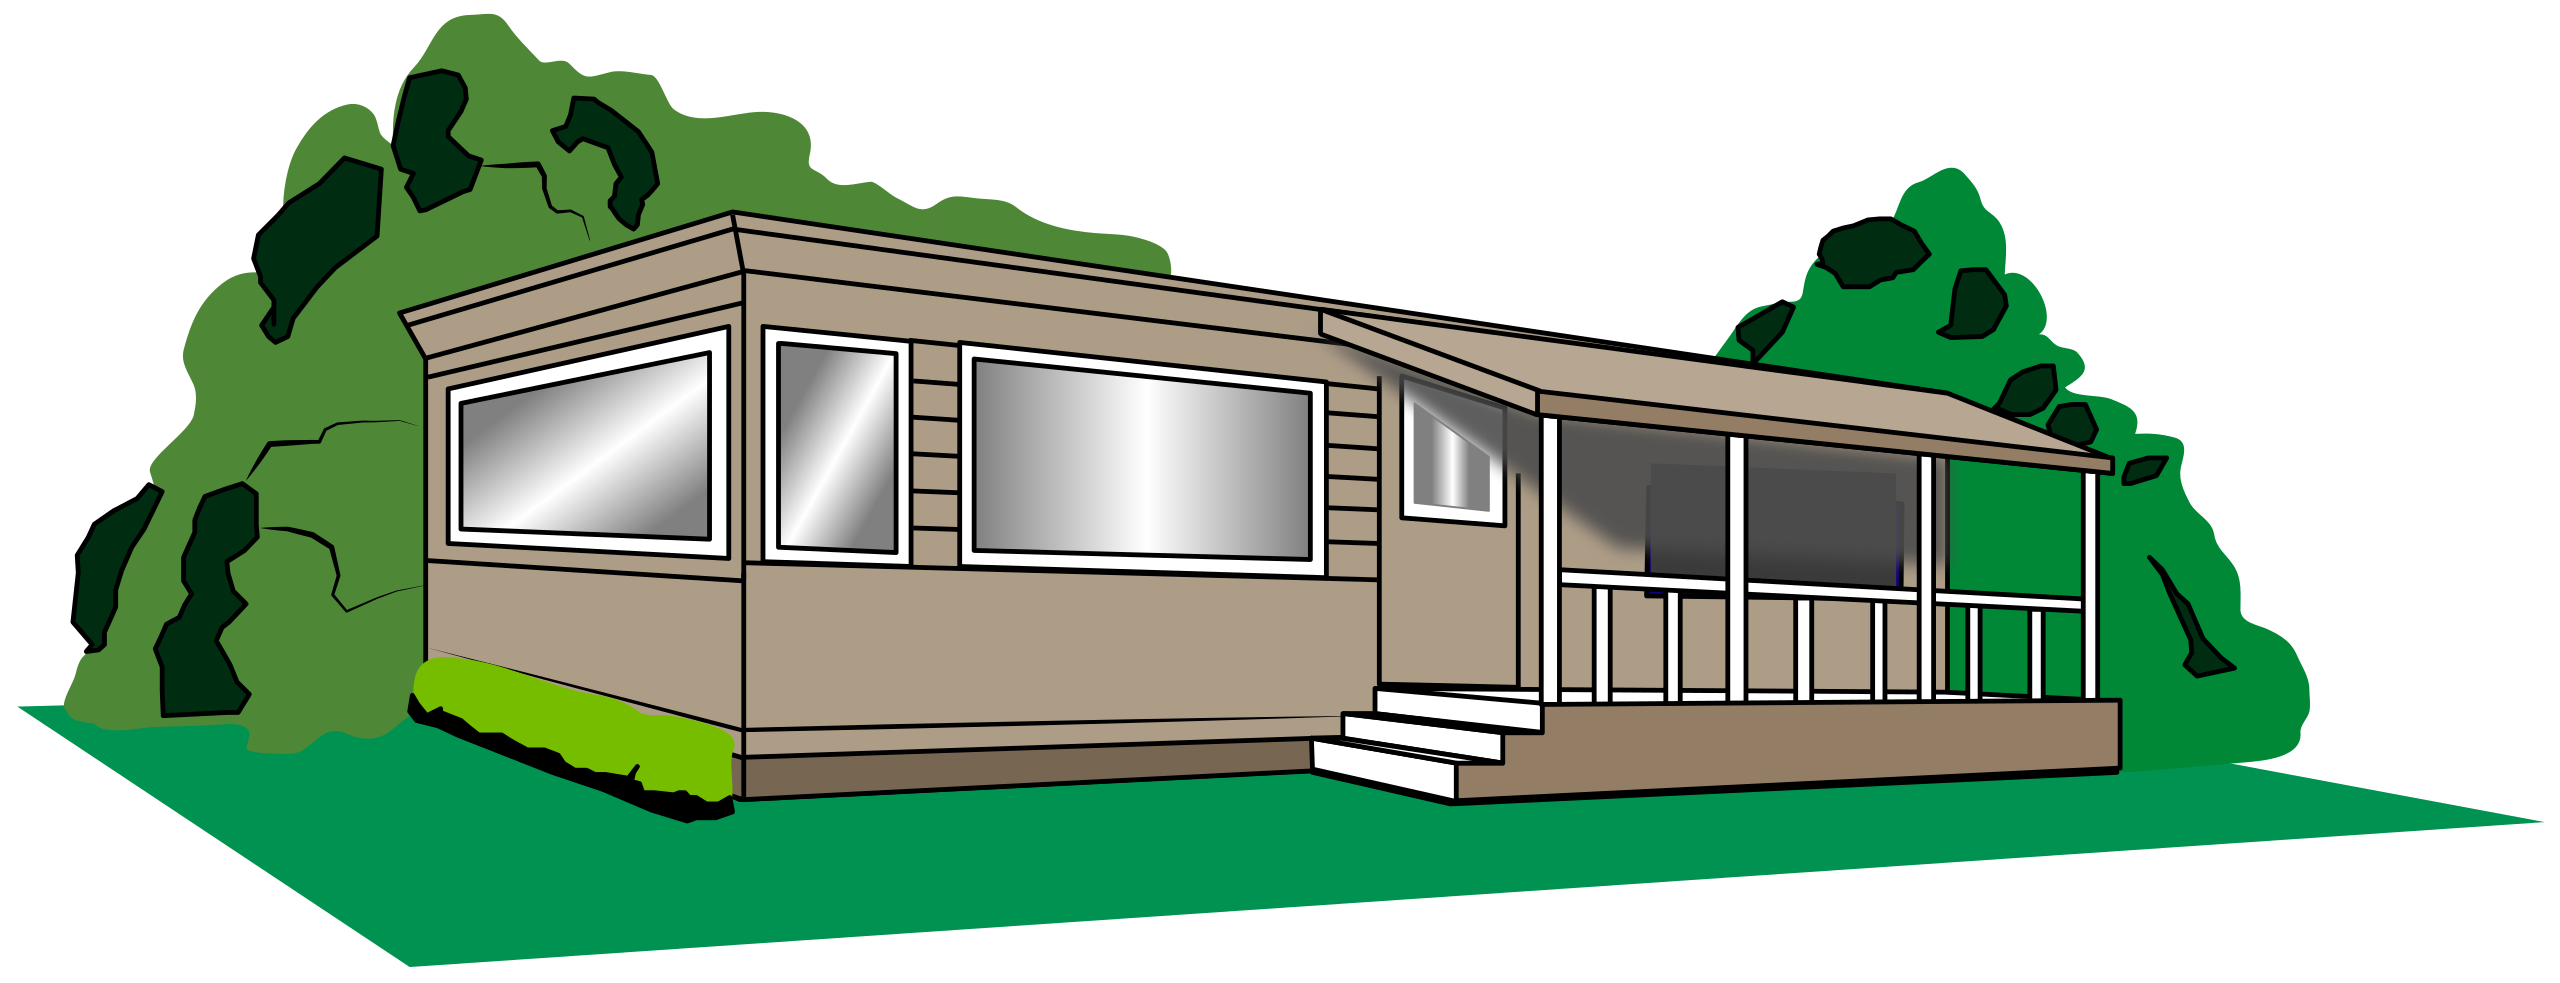 A mobile home.